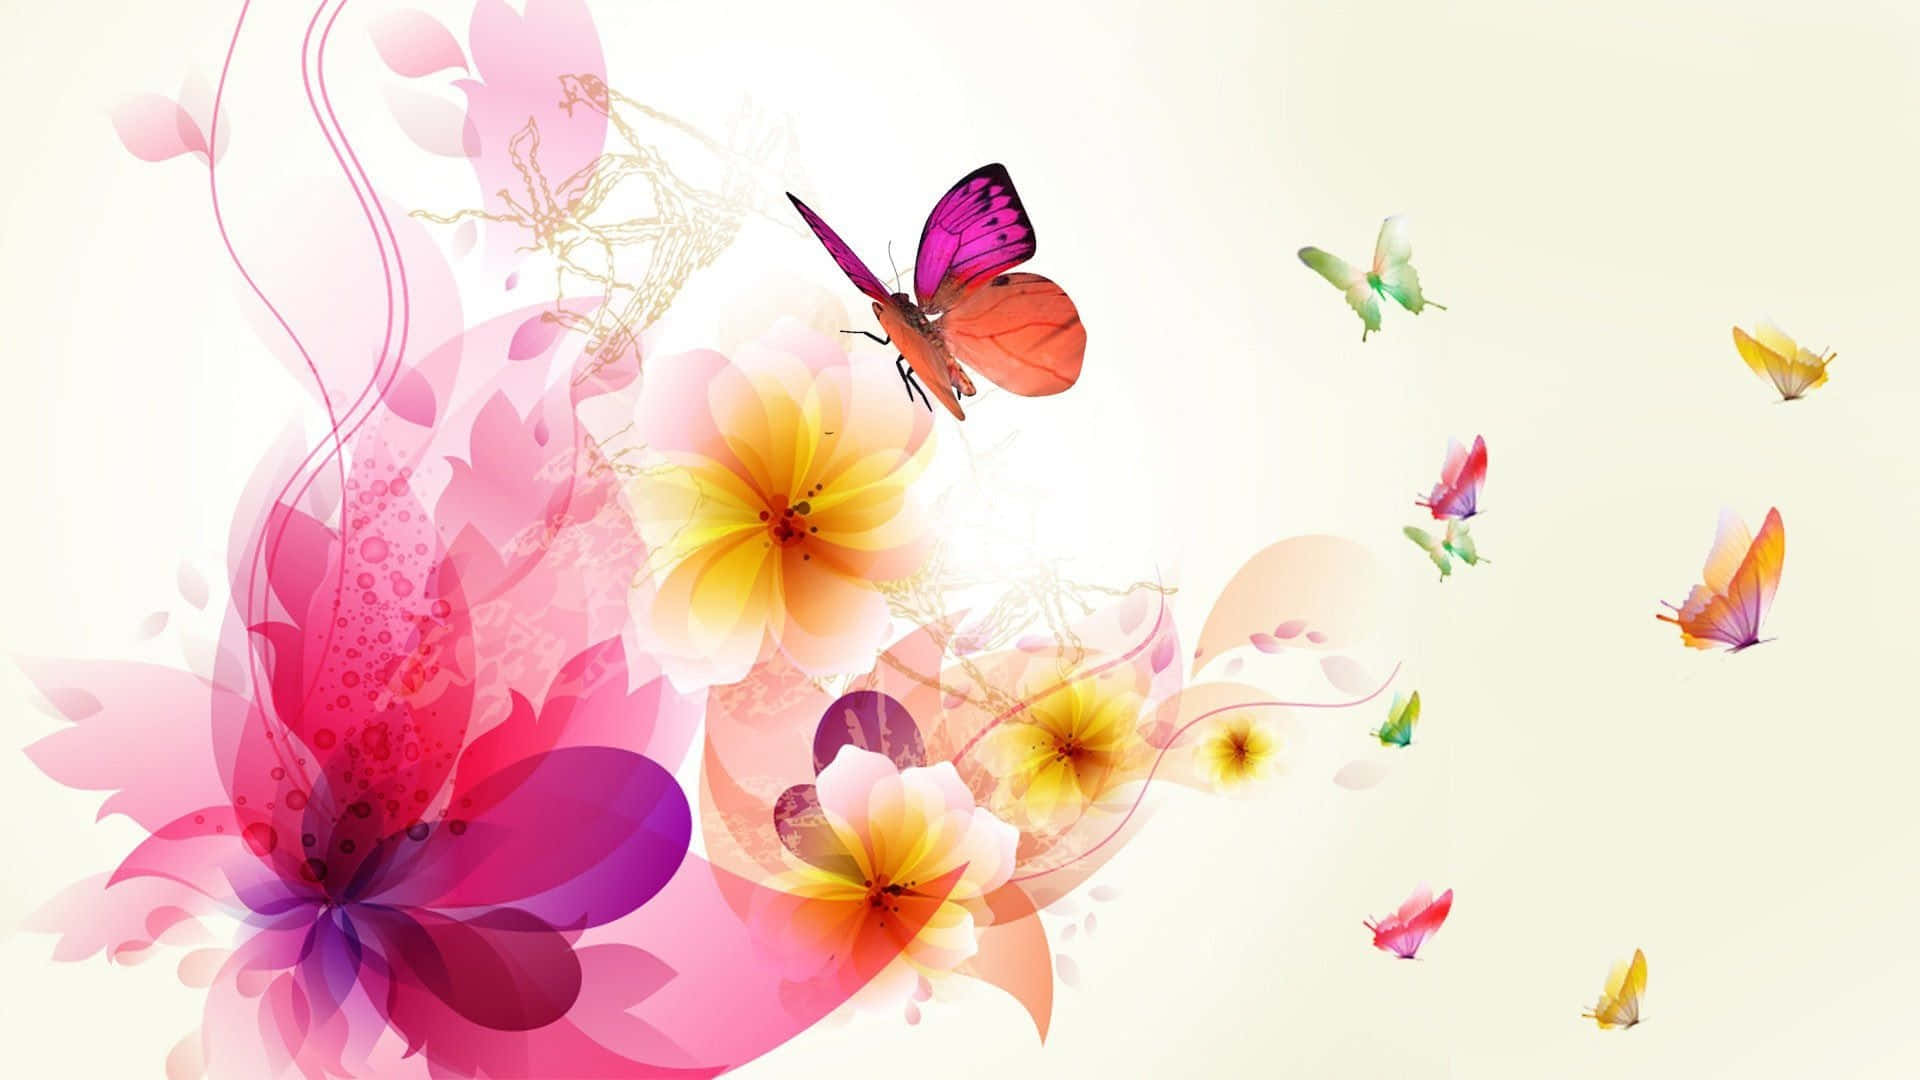 Blossoming Creativity in Flower Art Wallpaper